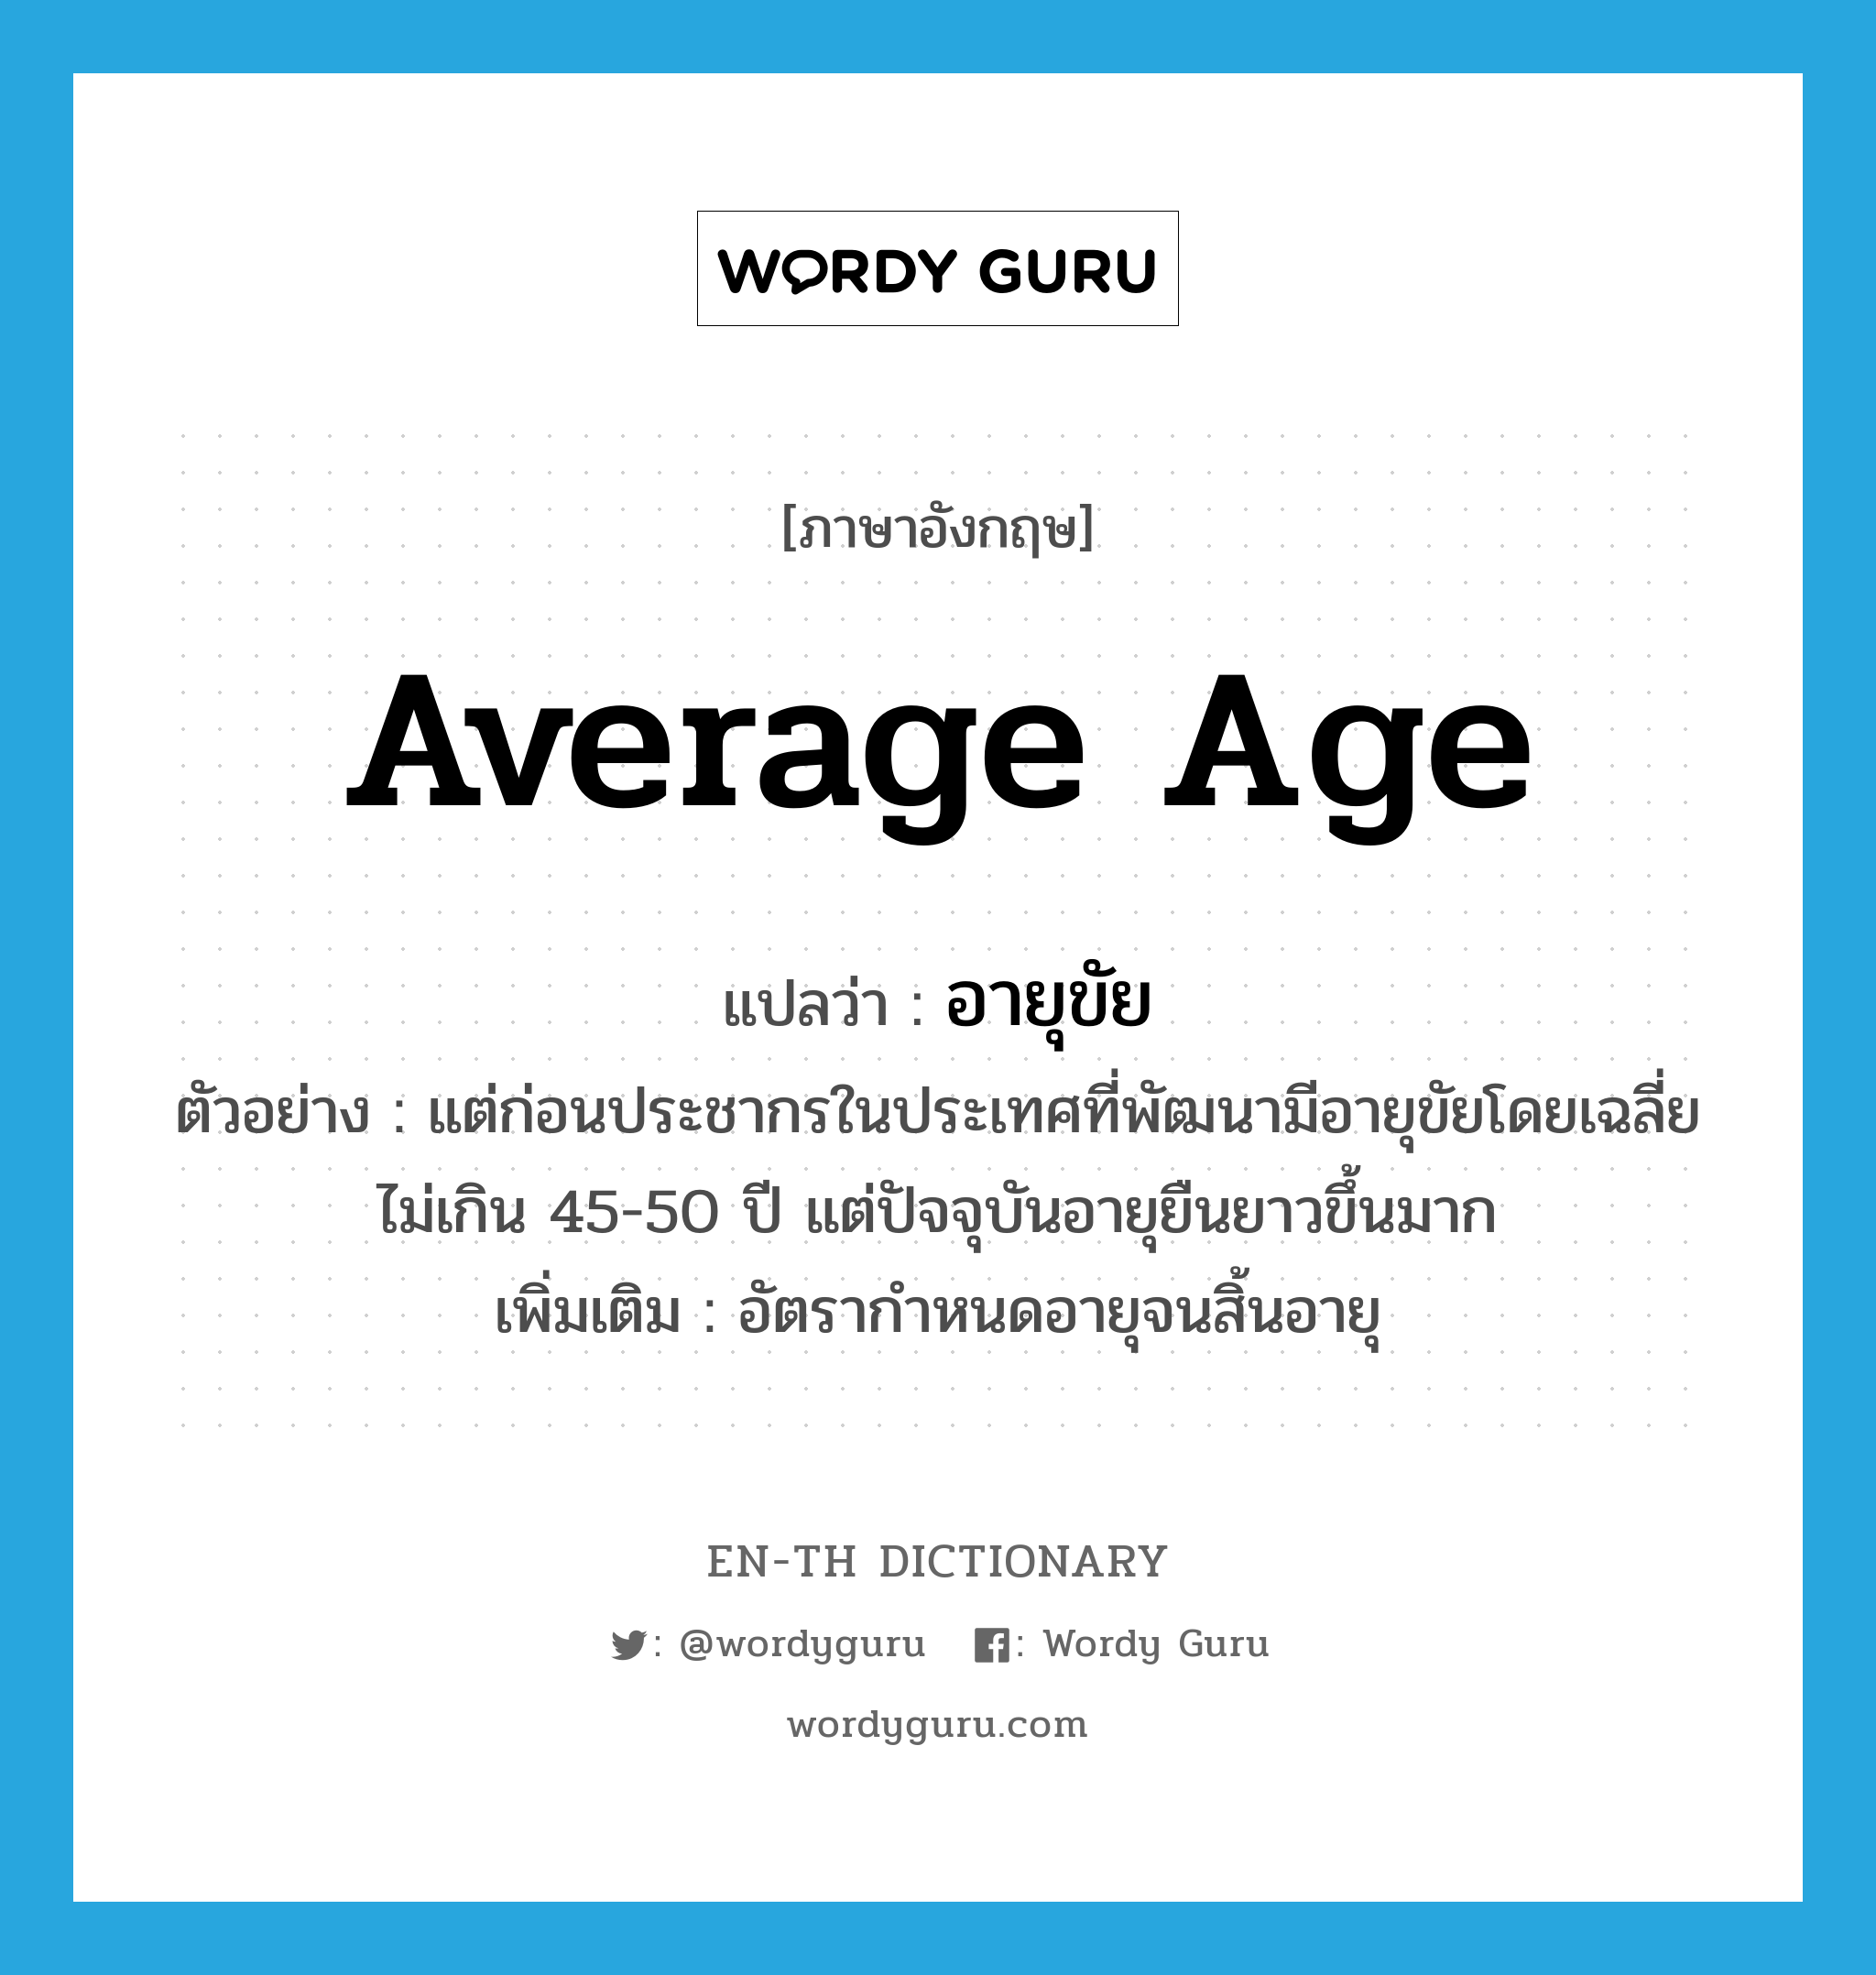 average age แปลว่า?, คำศัพท์ภาษาอังกฤษ average age แปลว่า อายุขัย ประเภท N ตัวอย่าง แต่ก่อนประชากรในประเทศที่พัฒนามีอายุขัยโดยเฉลี่ยไม่เกิน 45-50 ปี แต่ปัจจุบันอายุยืนยาวขึ้นมาก เพิ่มเติม อัตรากำหนดอายุจนสิ้นอายุ หมวด N